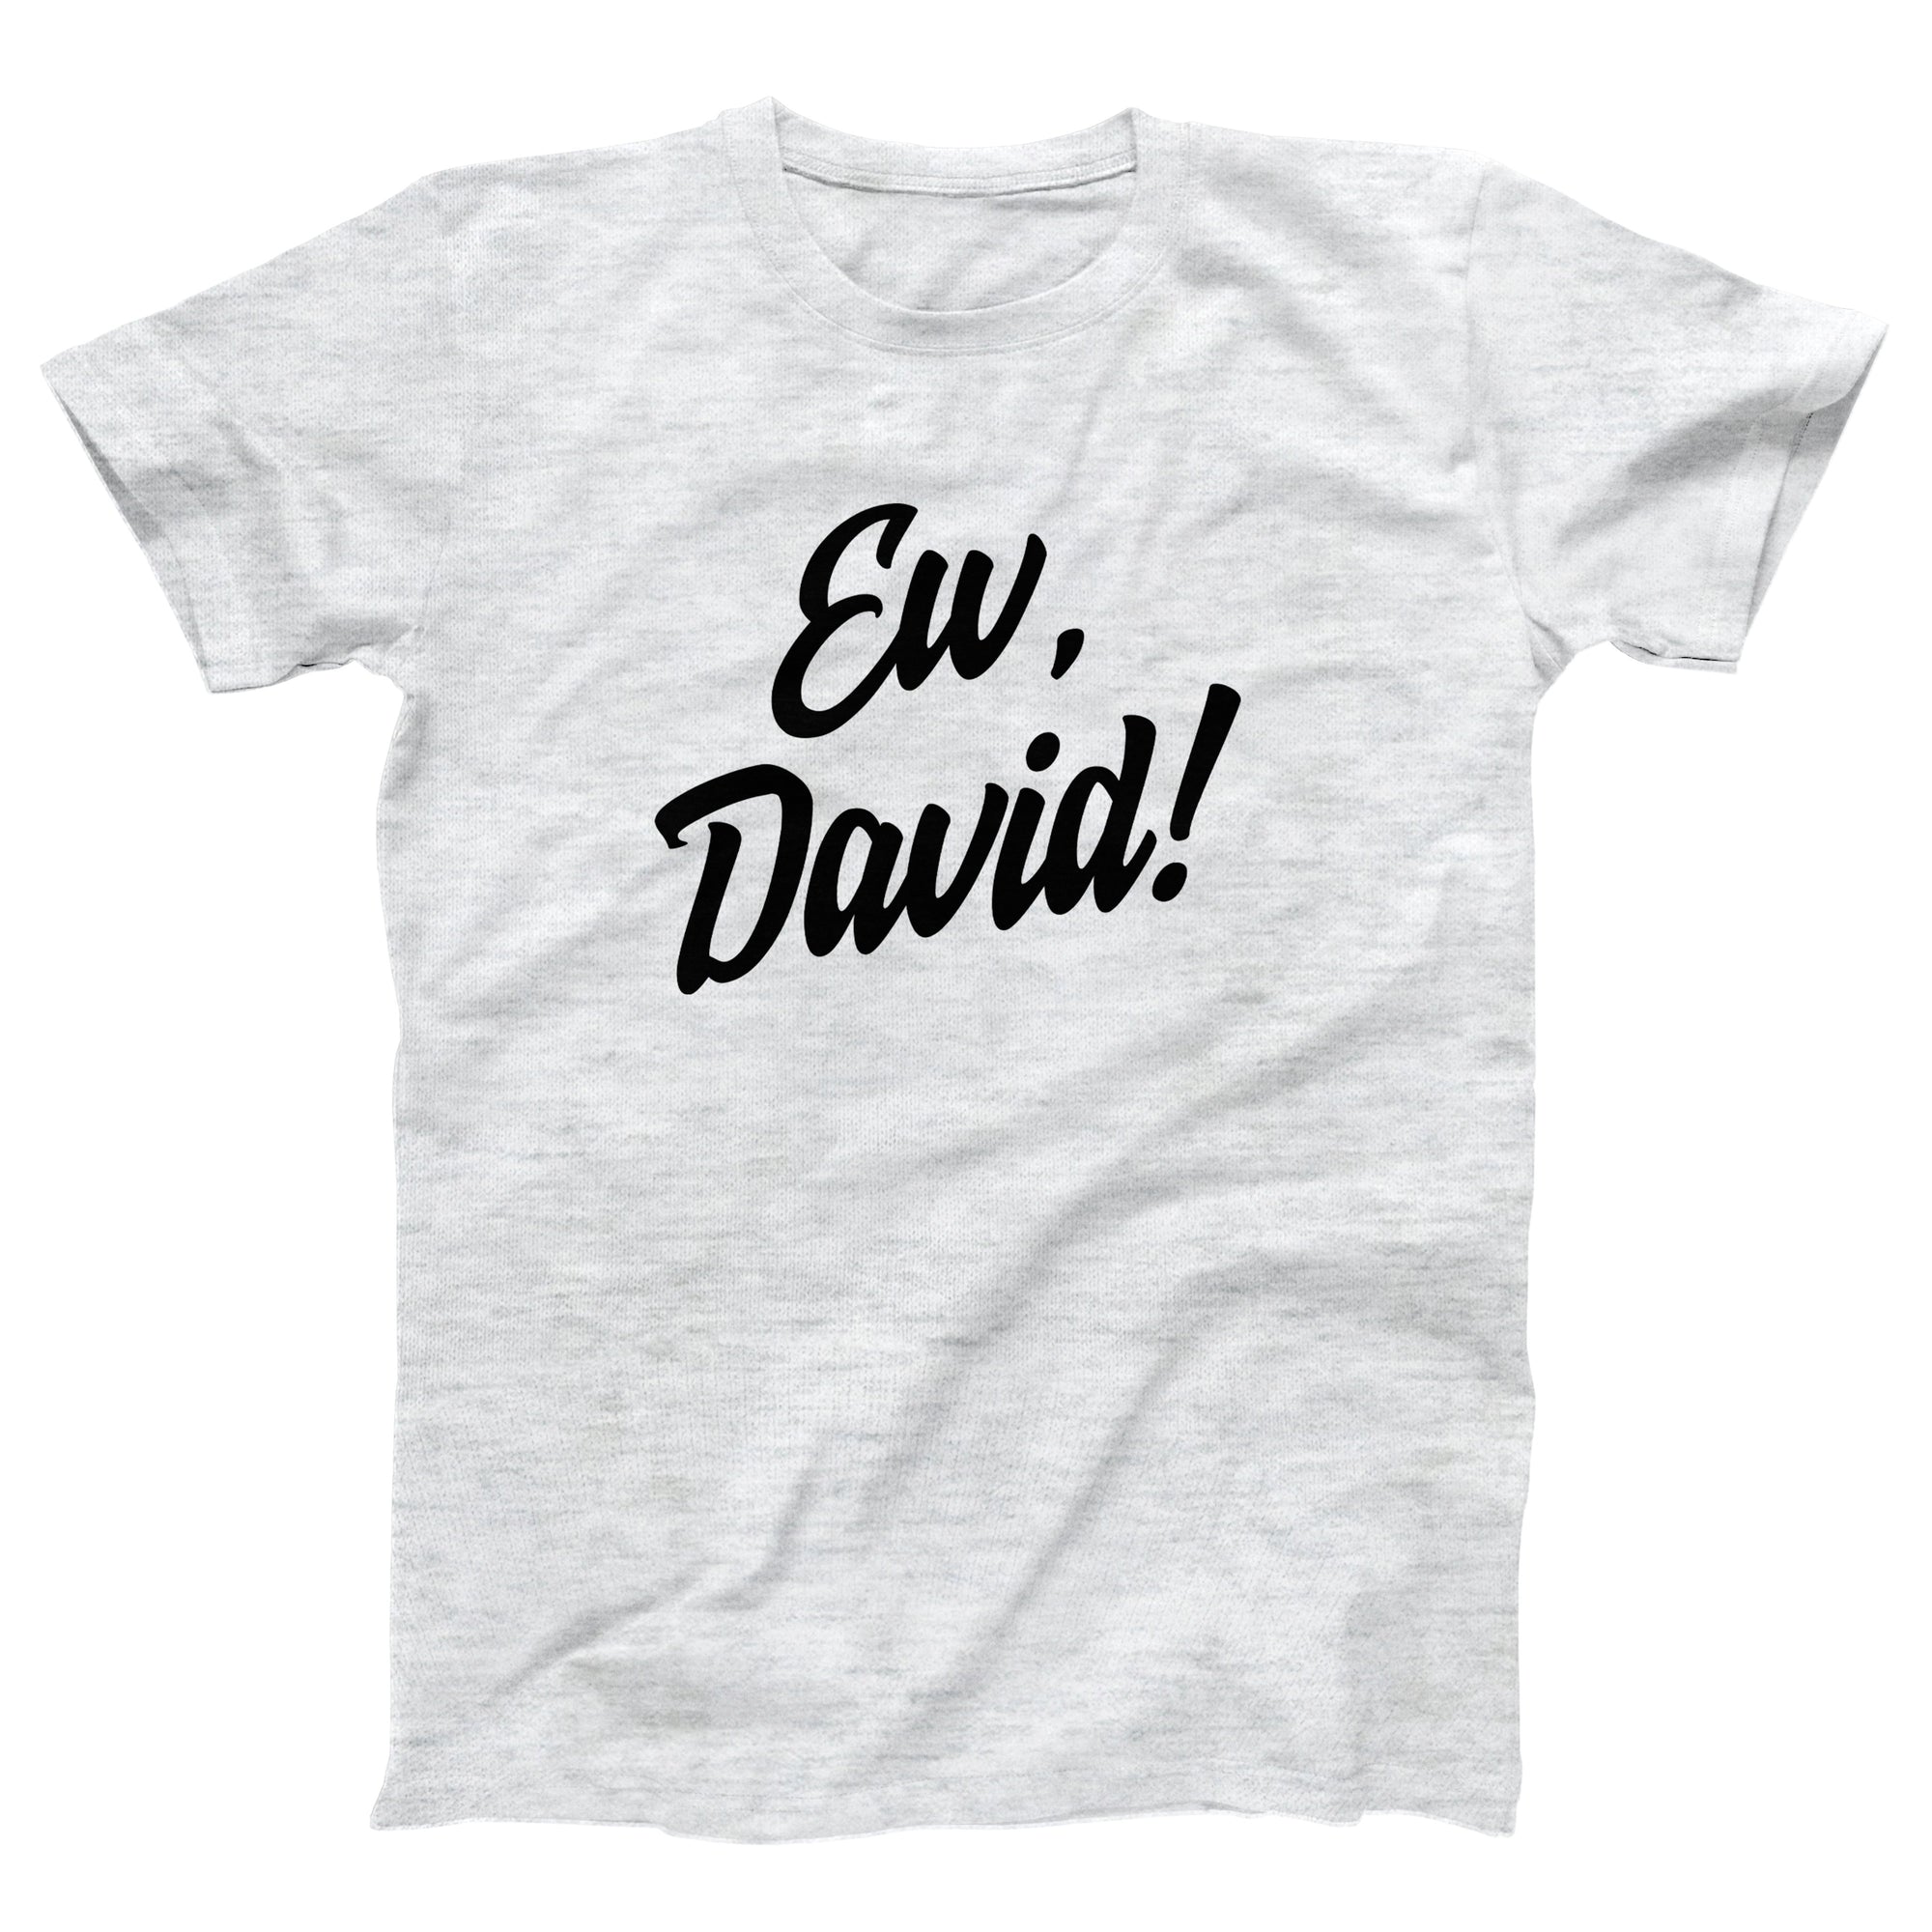 Ew, David! Adult Unisex T-Shirt - Twisted Gorilla